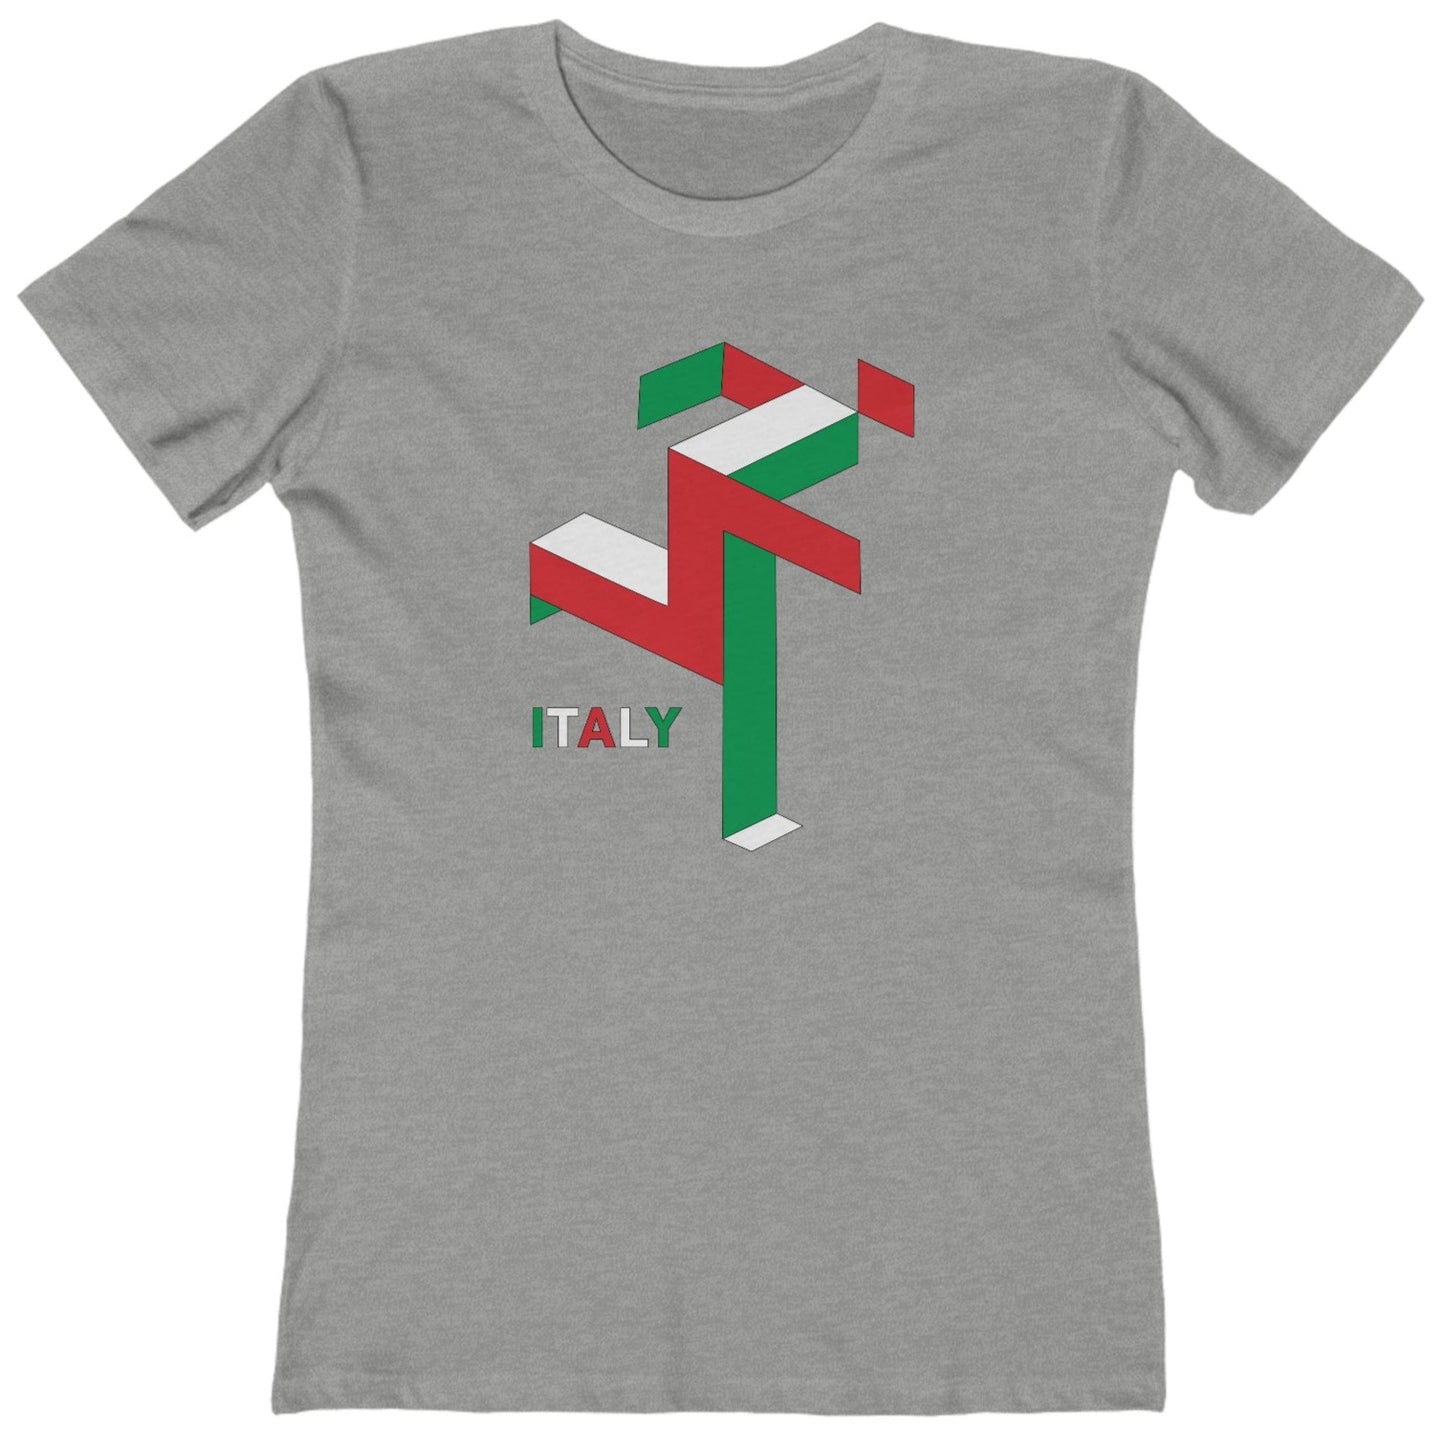 Italy runner Olympics t shirt